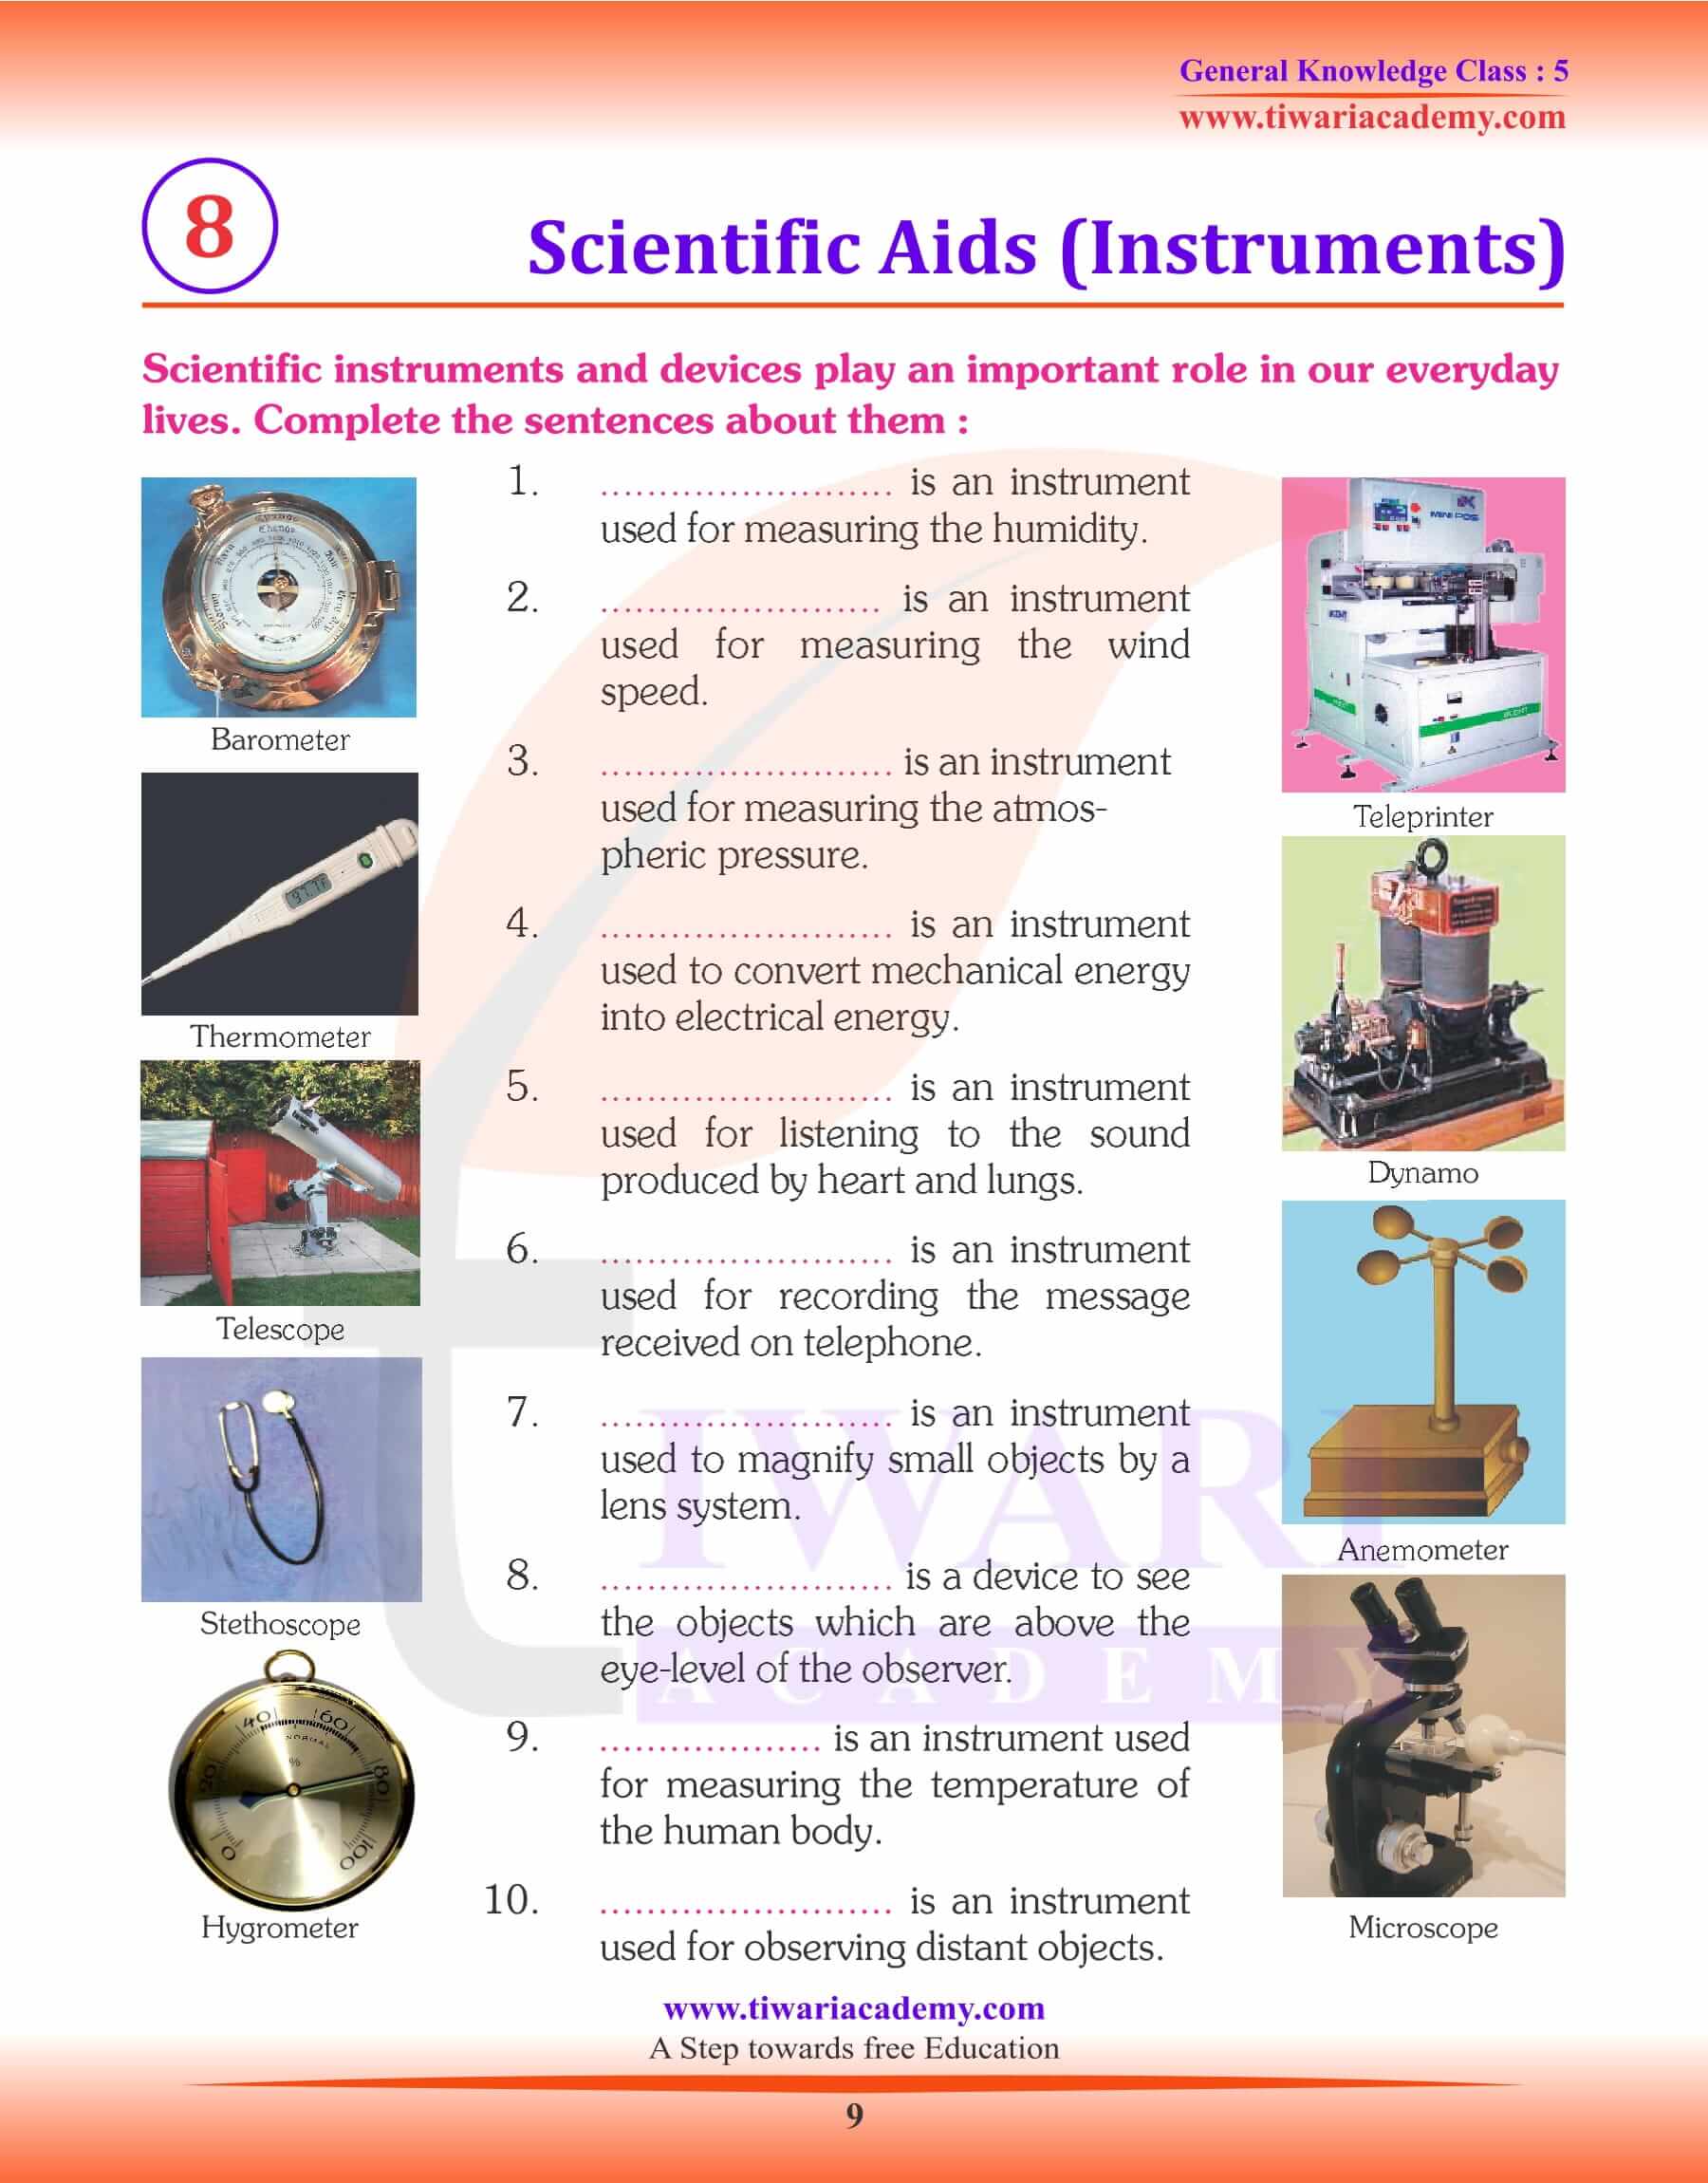 Scientific Aids (Instruments)